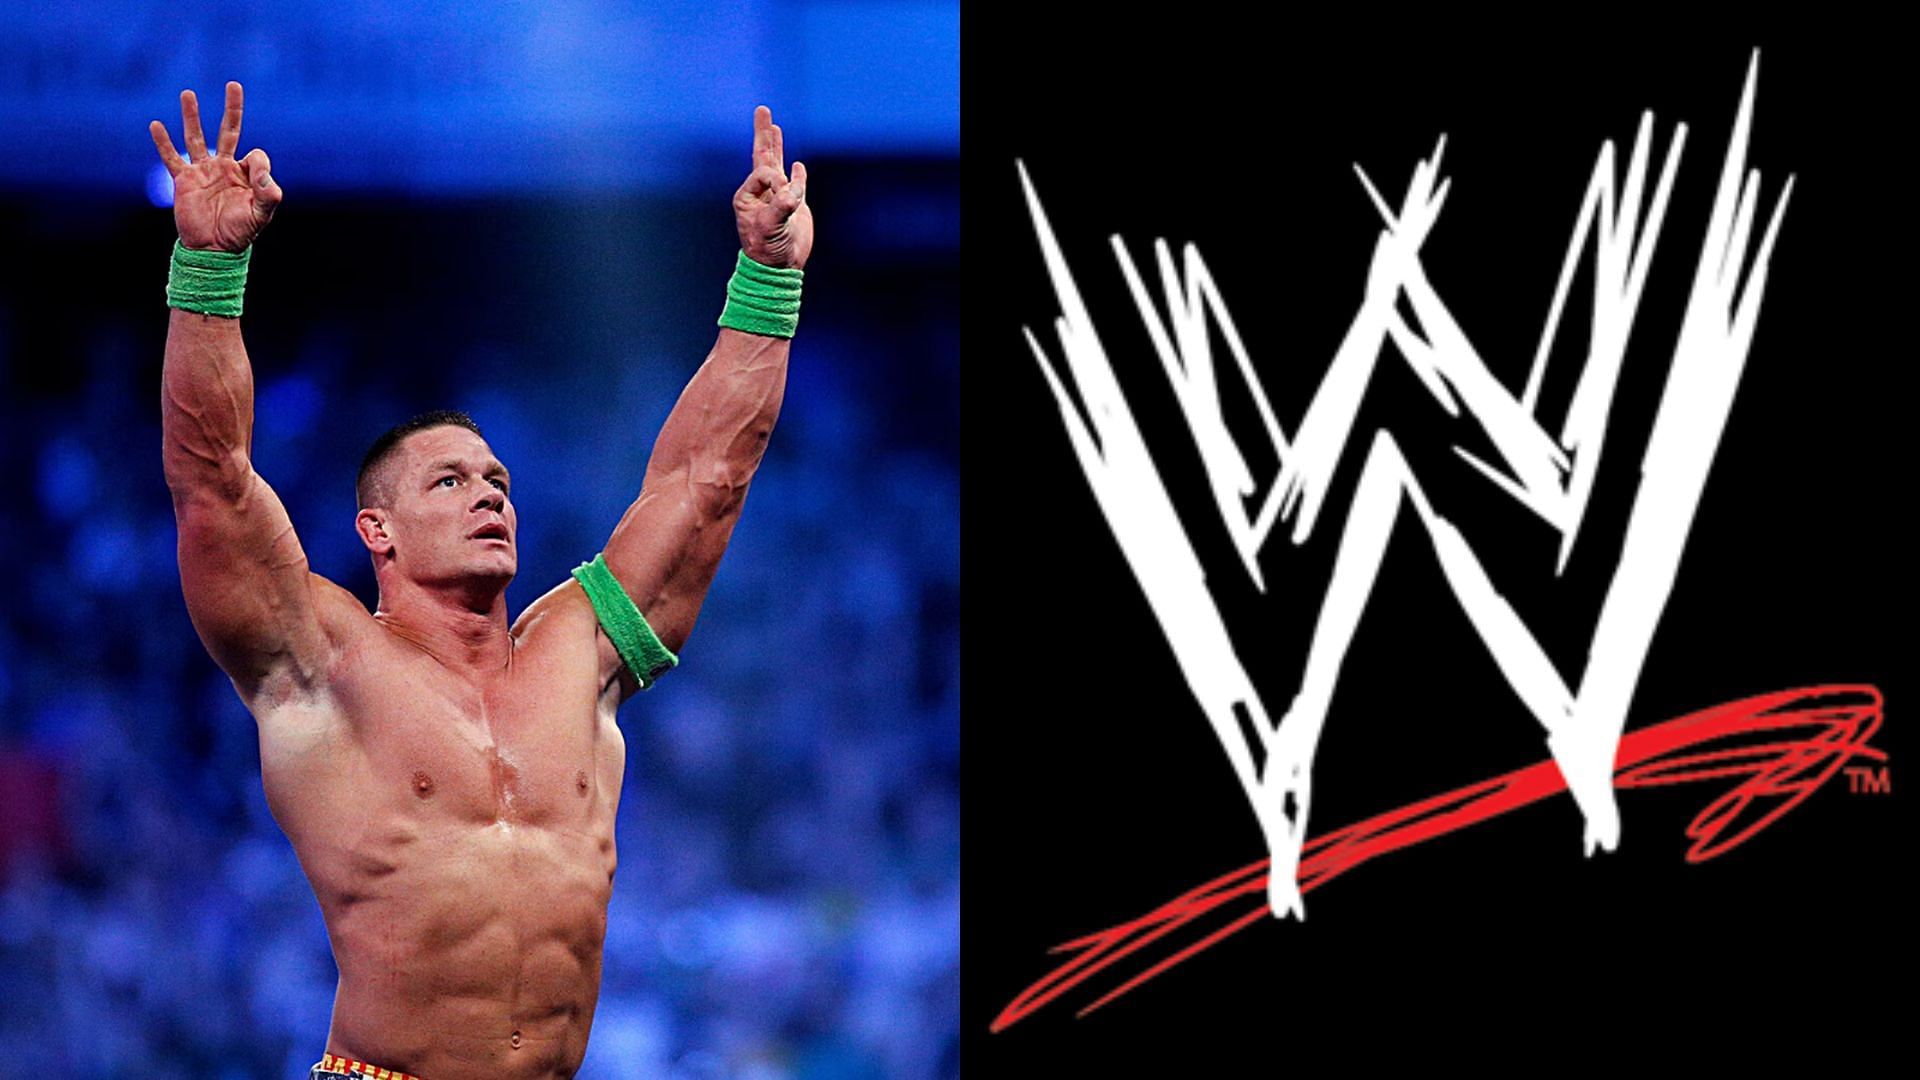 John Cena was all praise for the WWE star